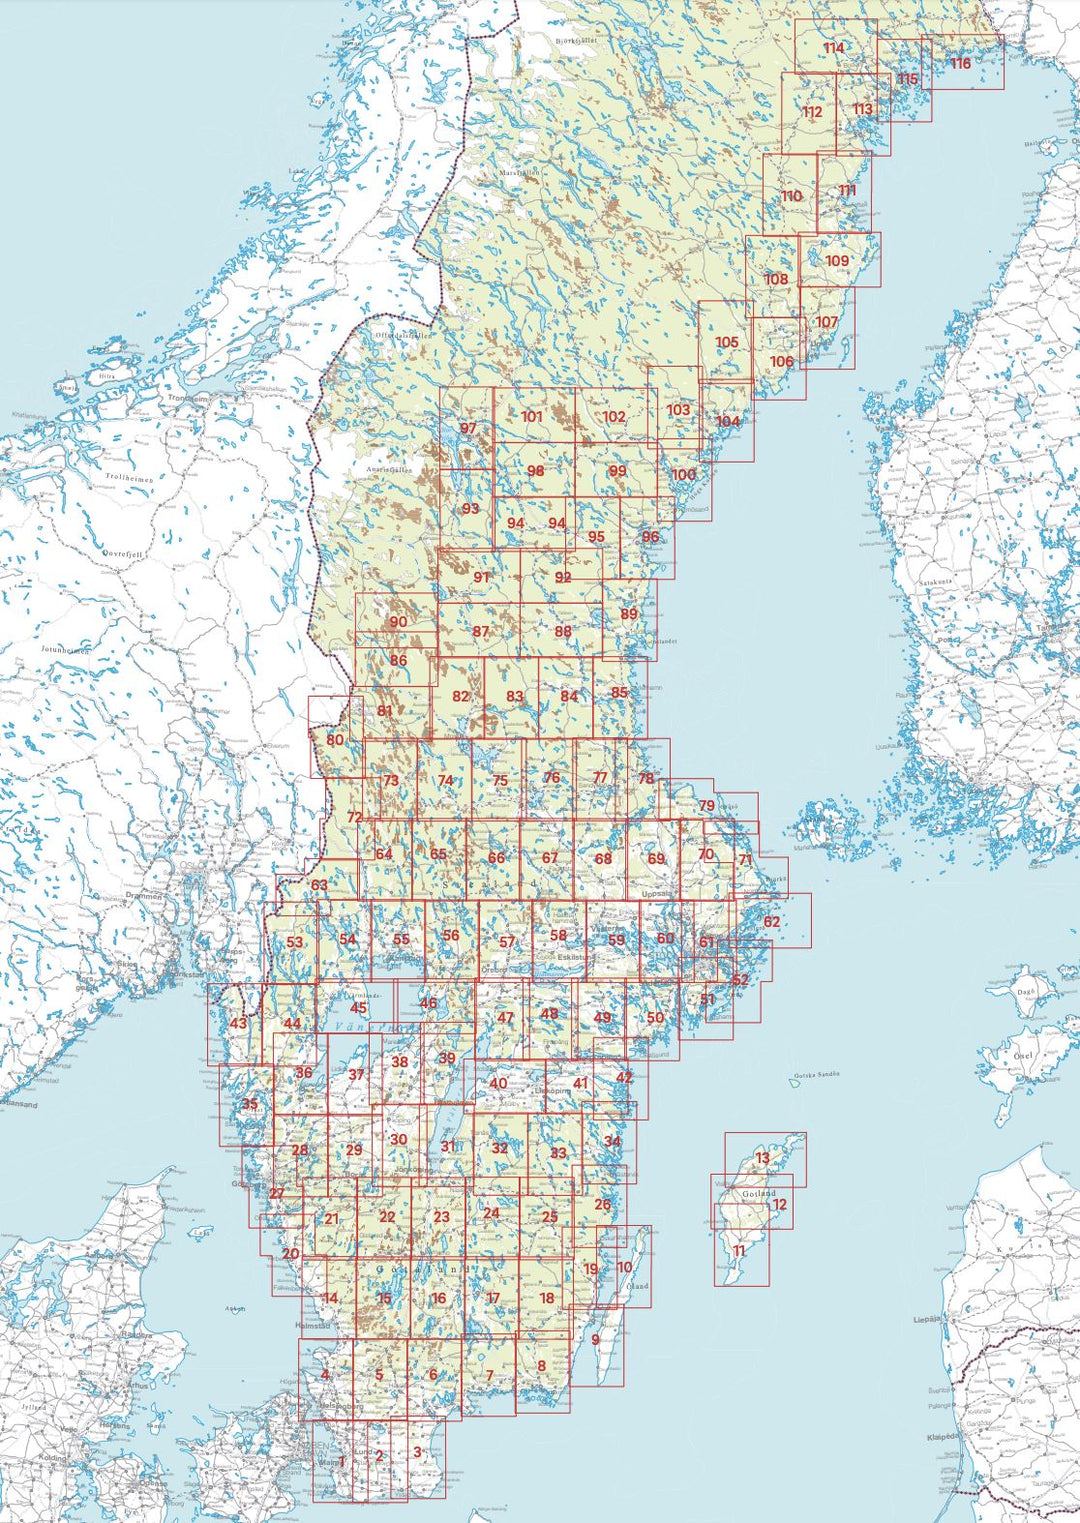 Carte topographique n° 41 - Söderköping (Suède) | Norstedts - Sverigeserien carte pliée Norstedts 